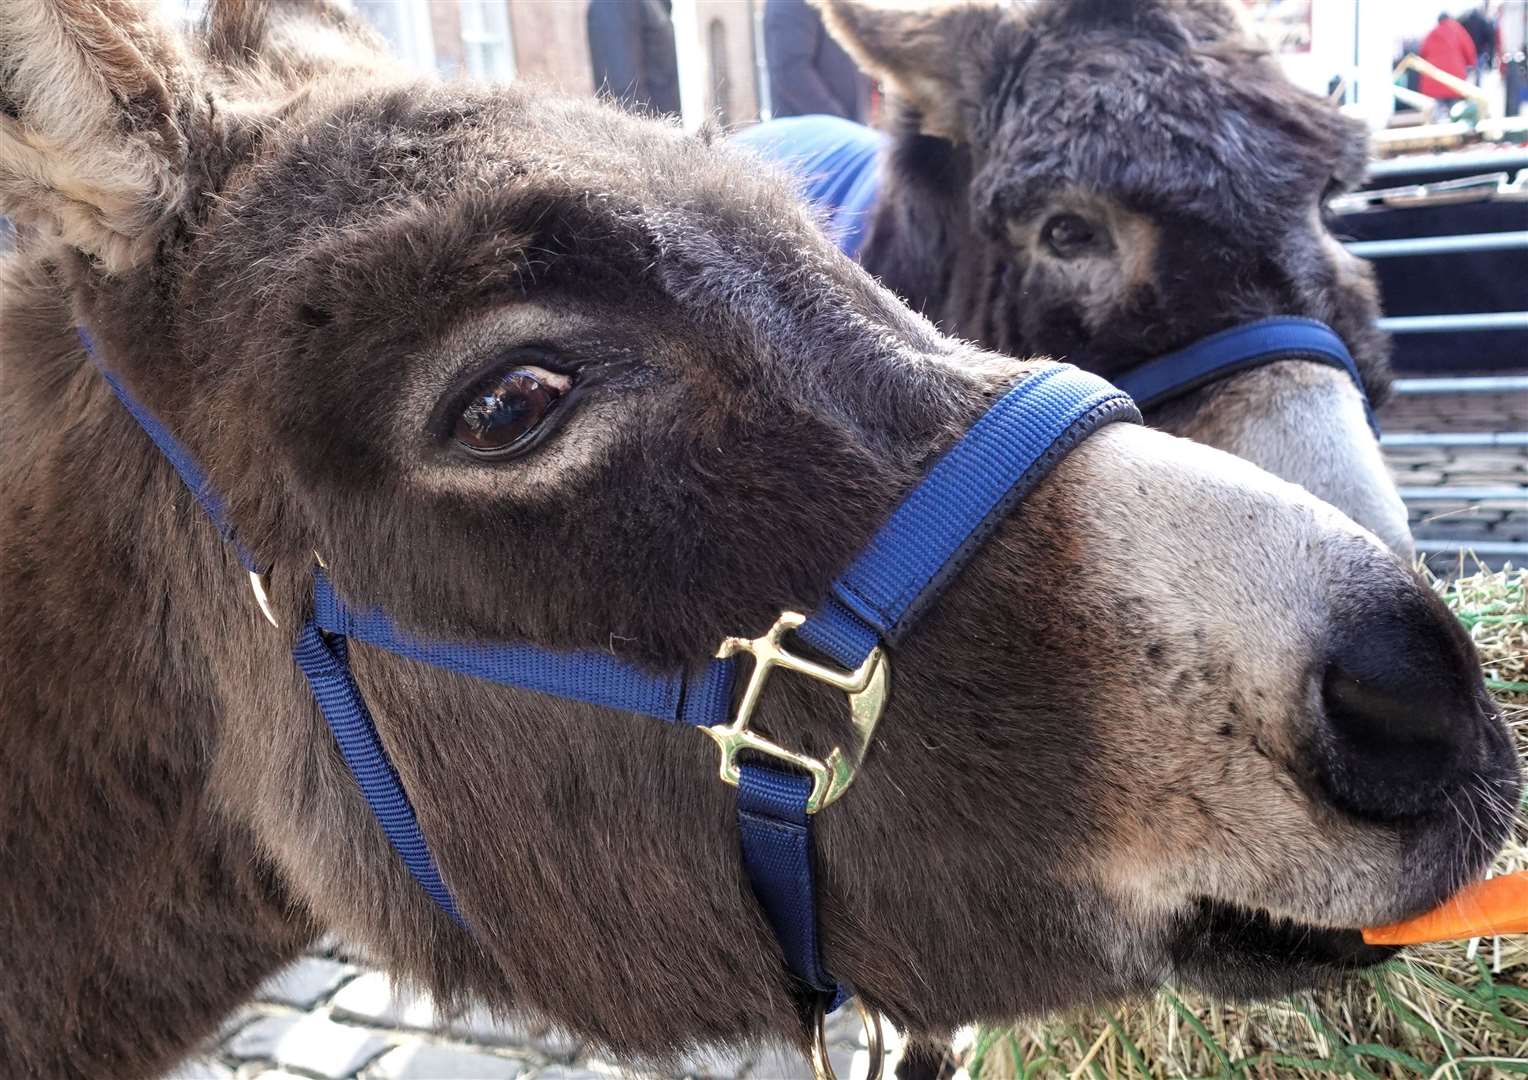 Meet the donkeys in Faversham